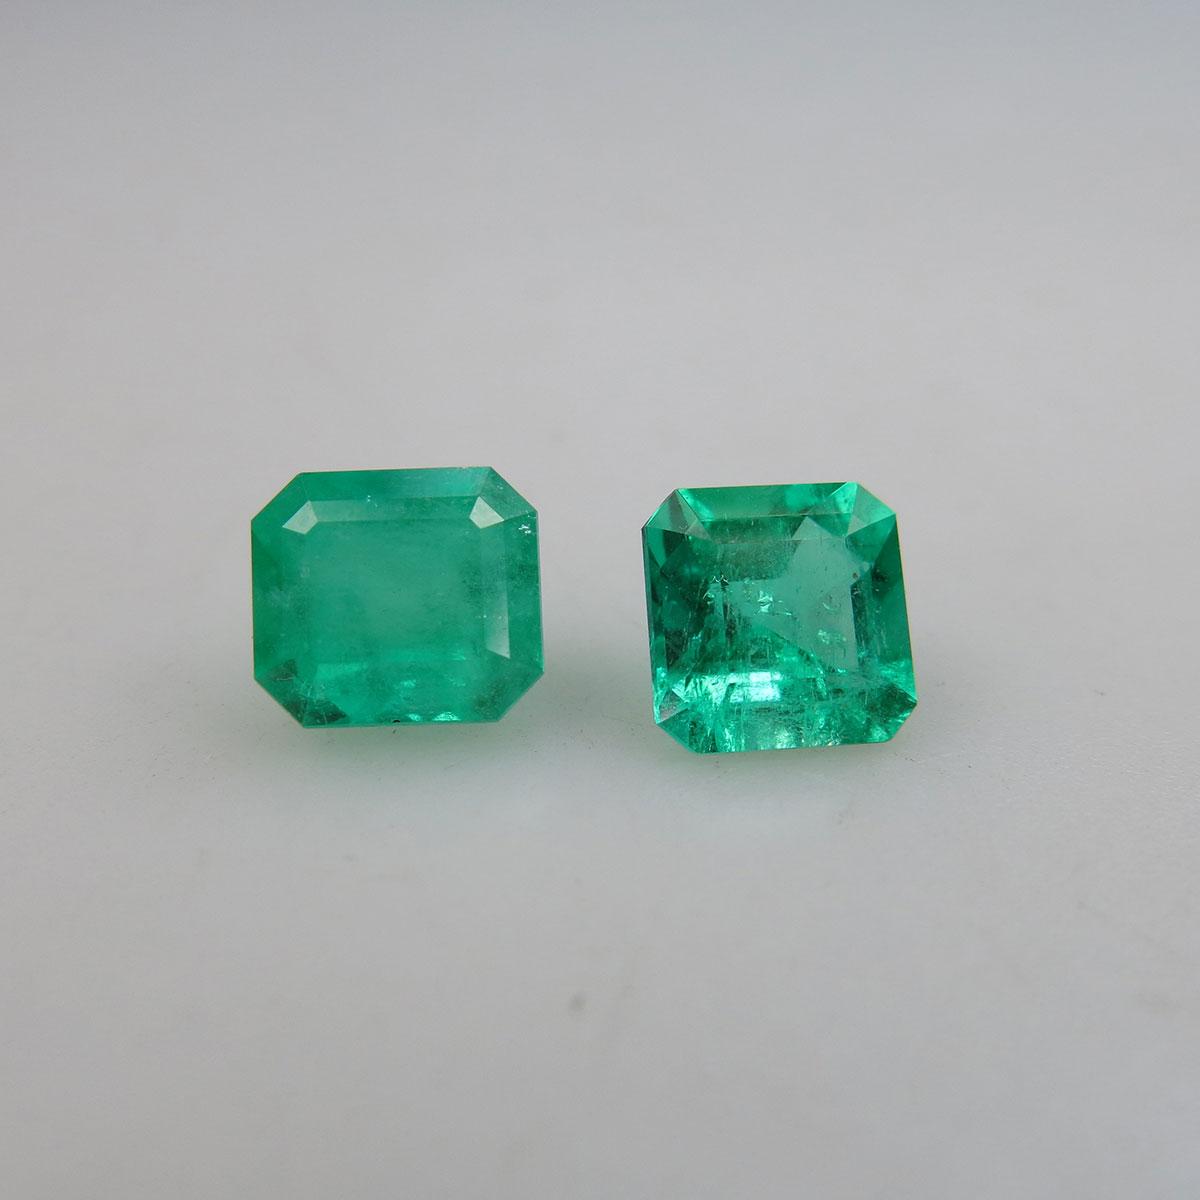 2 Unmounted Emerald Cut Emeralds